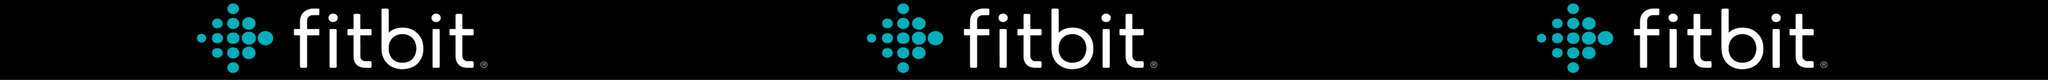 Fitbit Custom Printed Retractable Belt